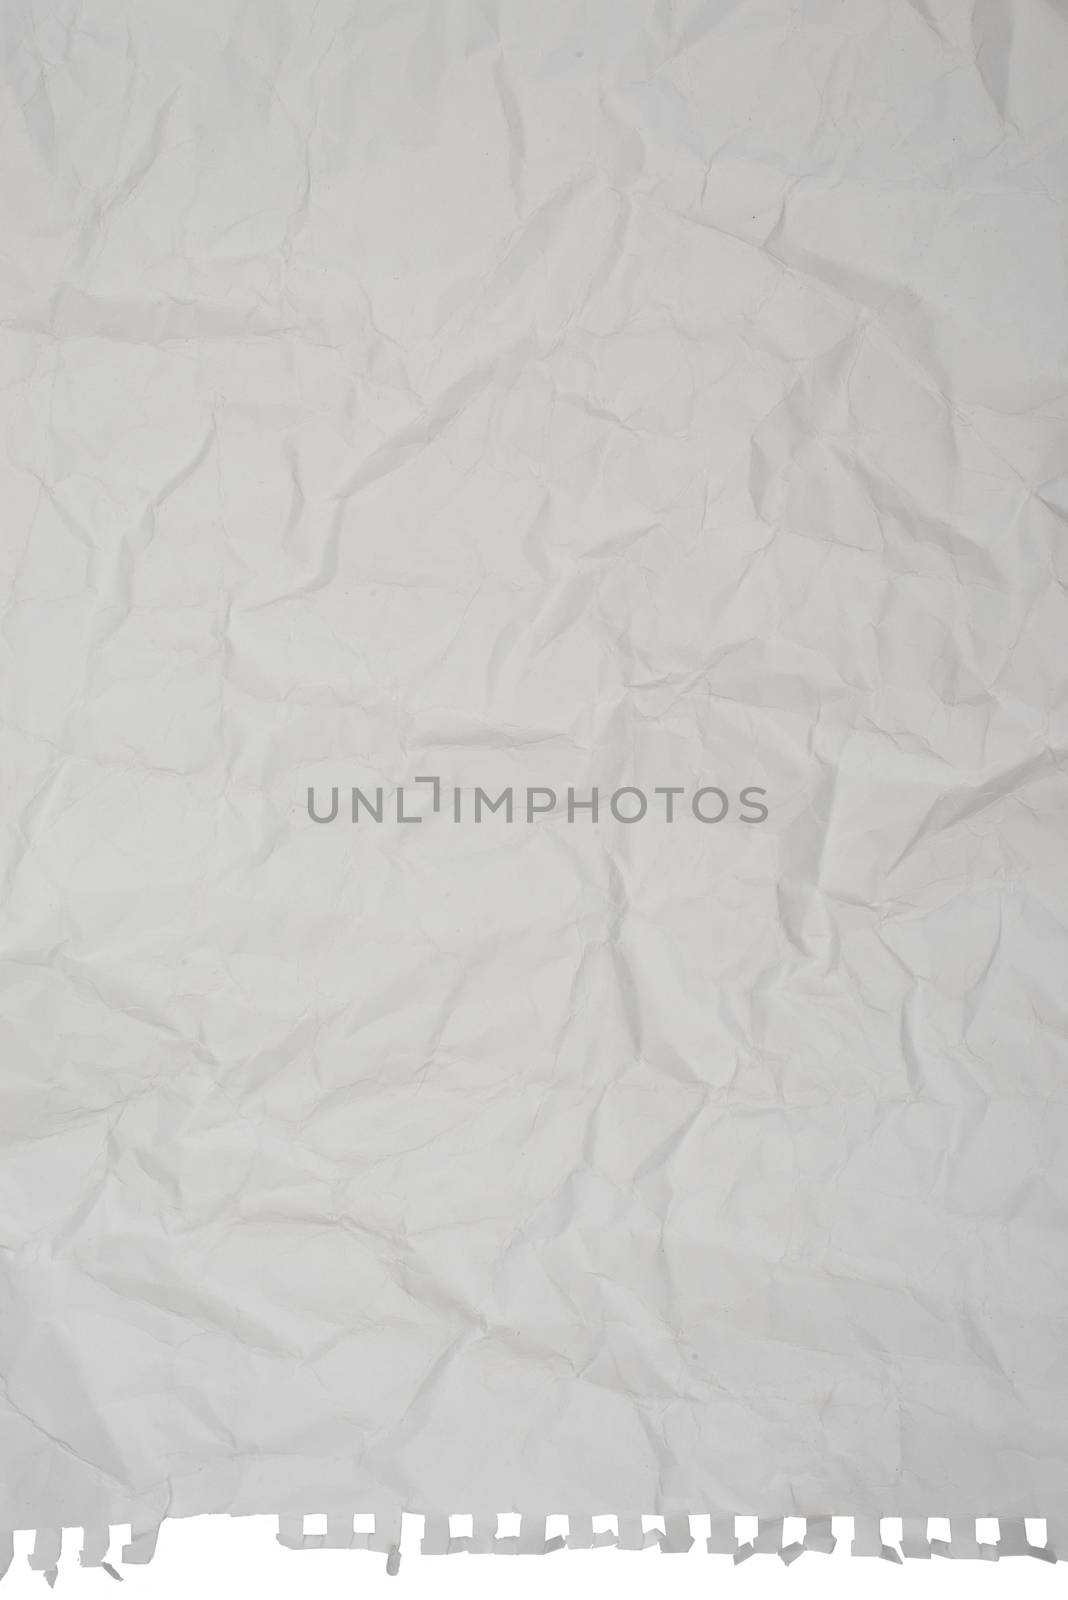 Crumpled white paper by cherezoff